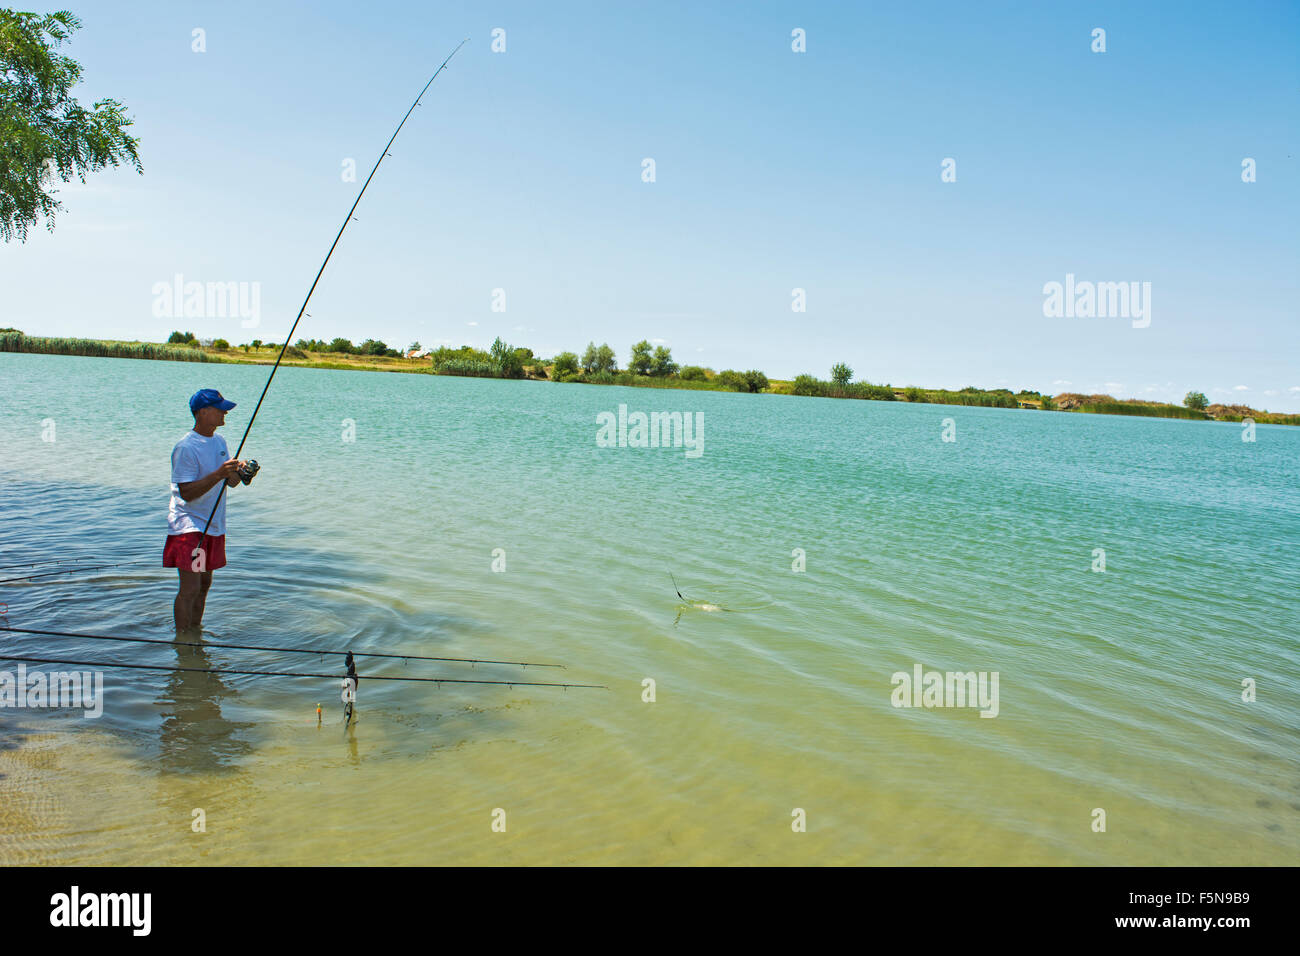 Fisherman on the lake draws hooked fish. Stock Photo